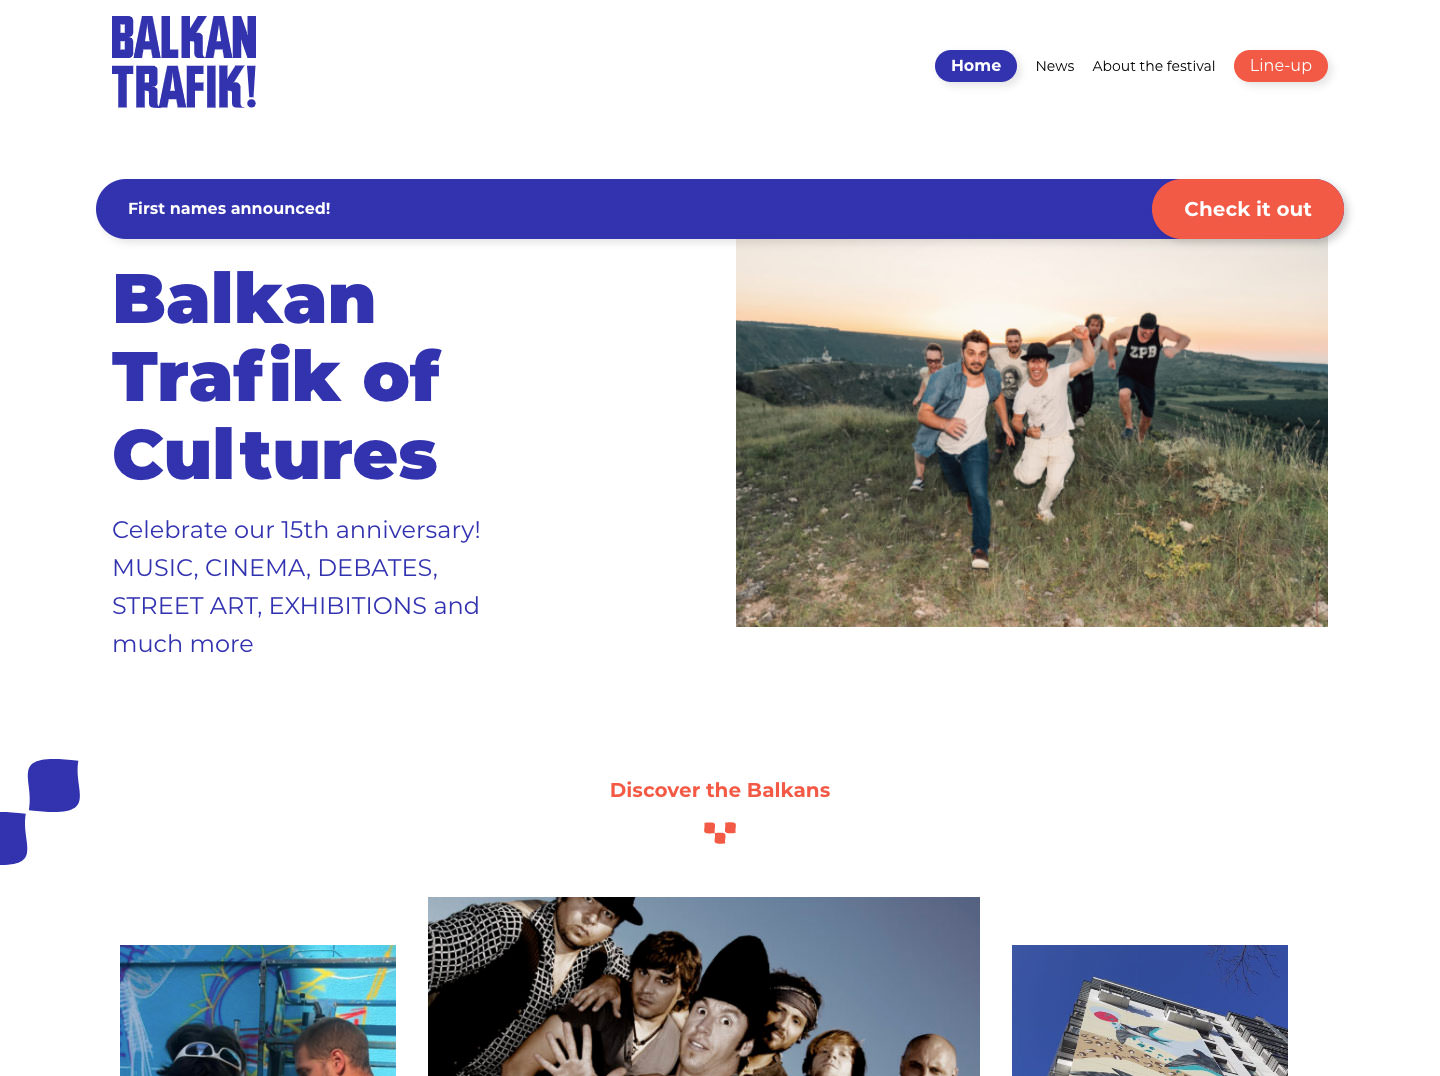 Balkan Trafik - Development of Website